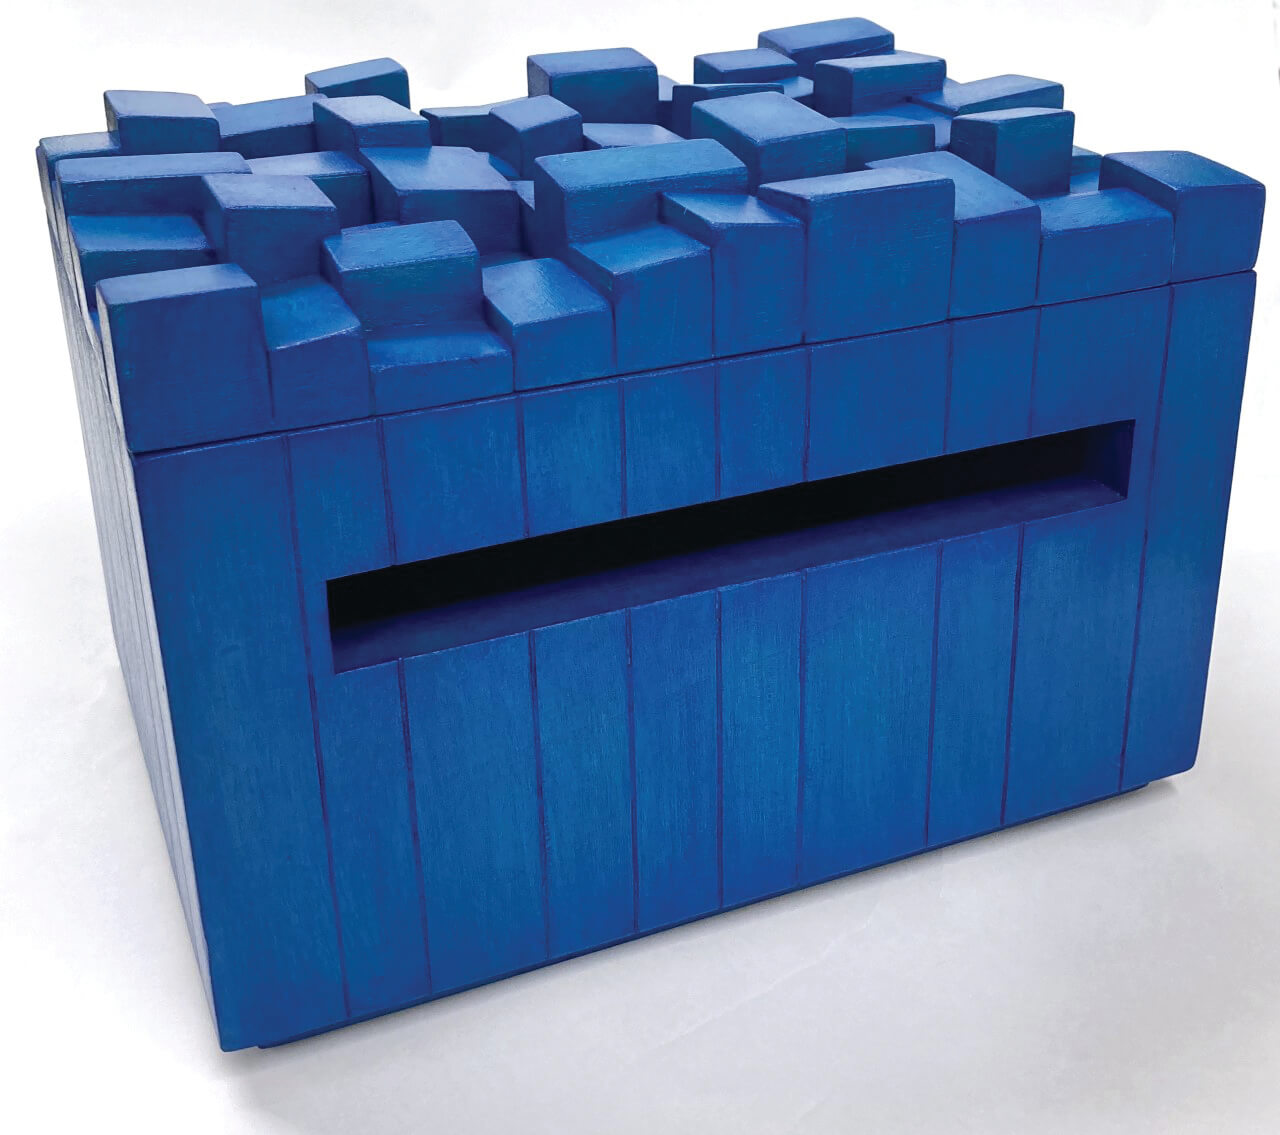 Tobi Kahn was the first artist approached to make a tzedek box.